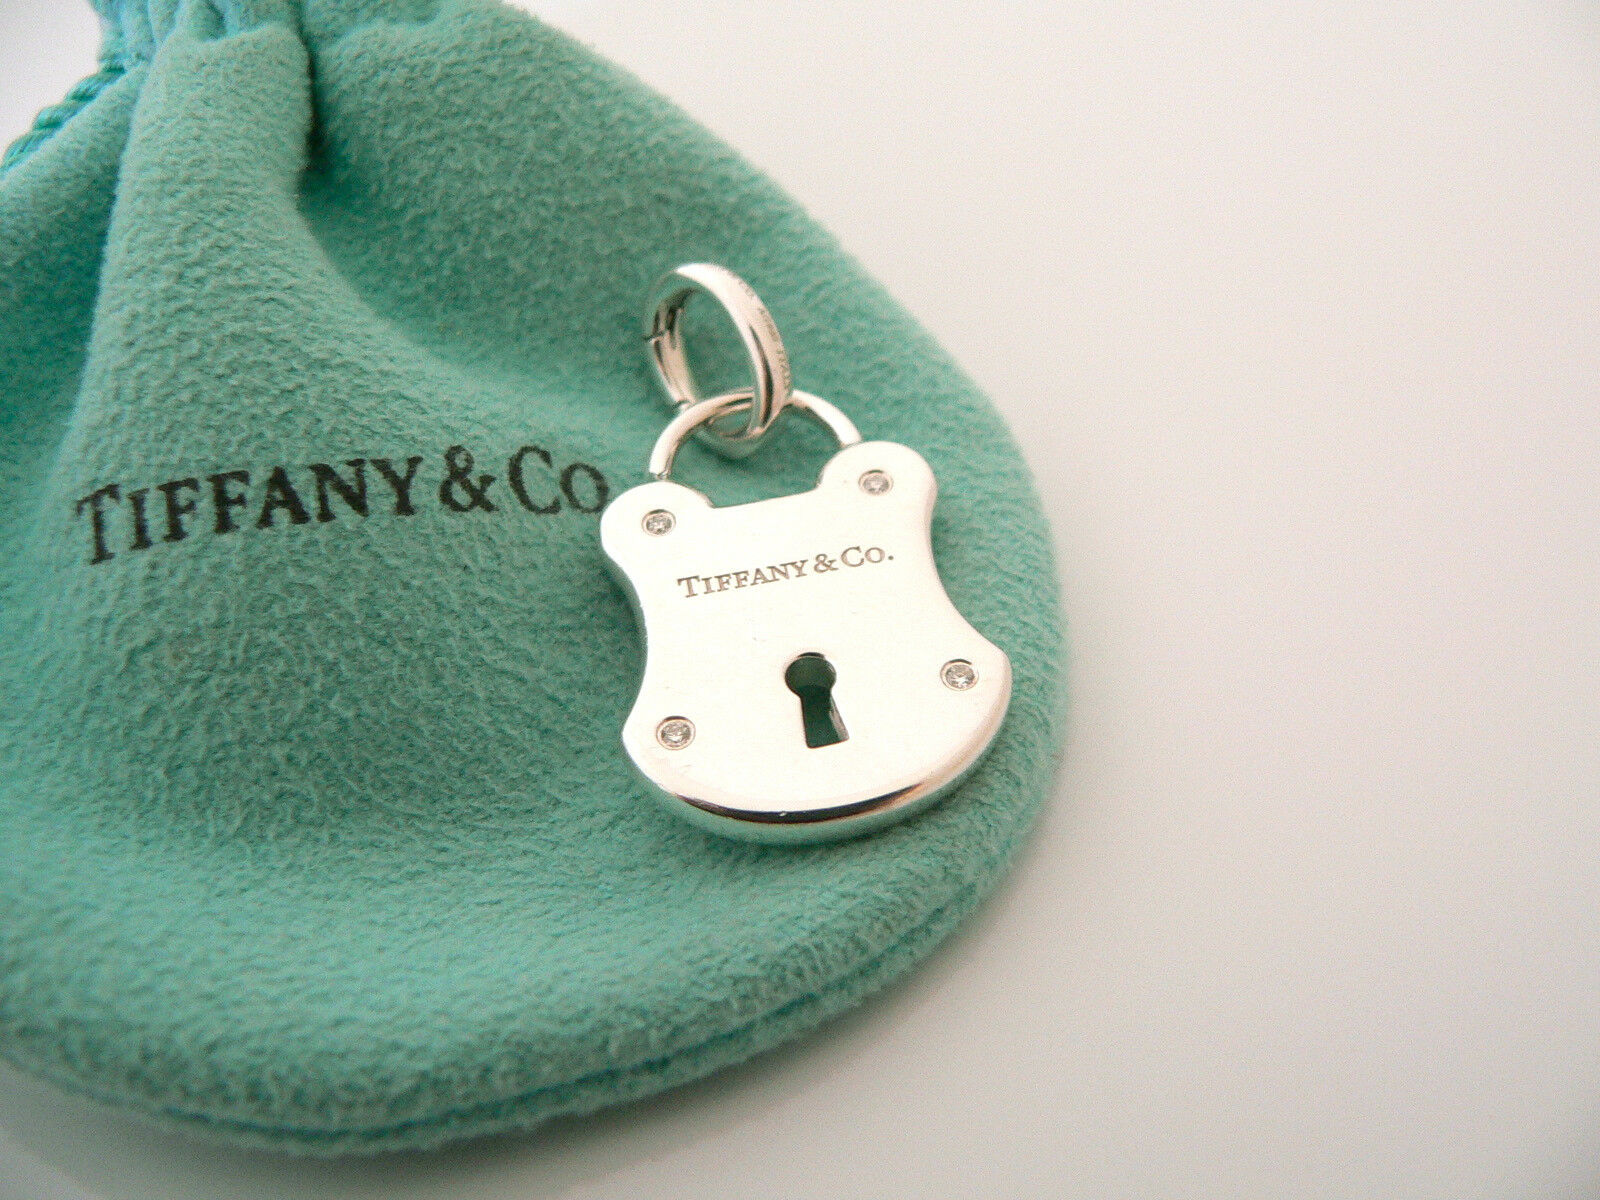 Tiffany & Co Silver Diamond Locks Key Hole Charm Pendant Necklace Bracelet Clasp